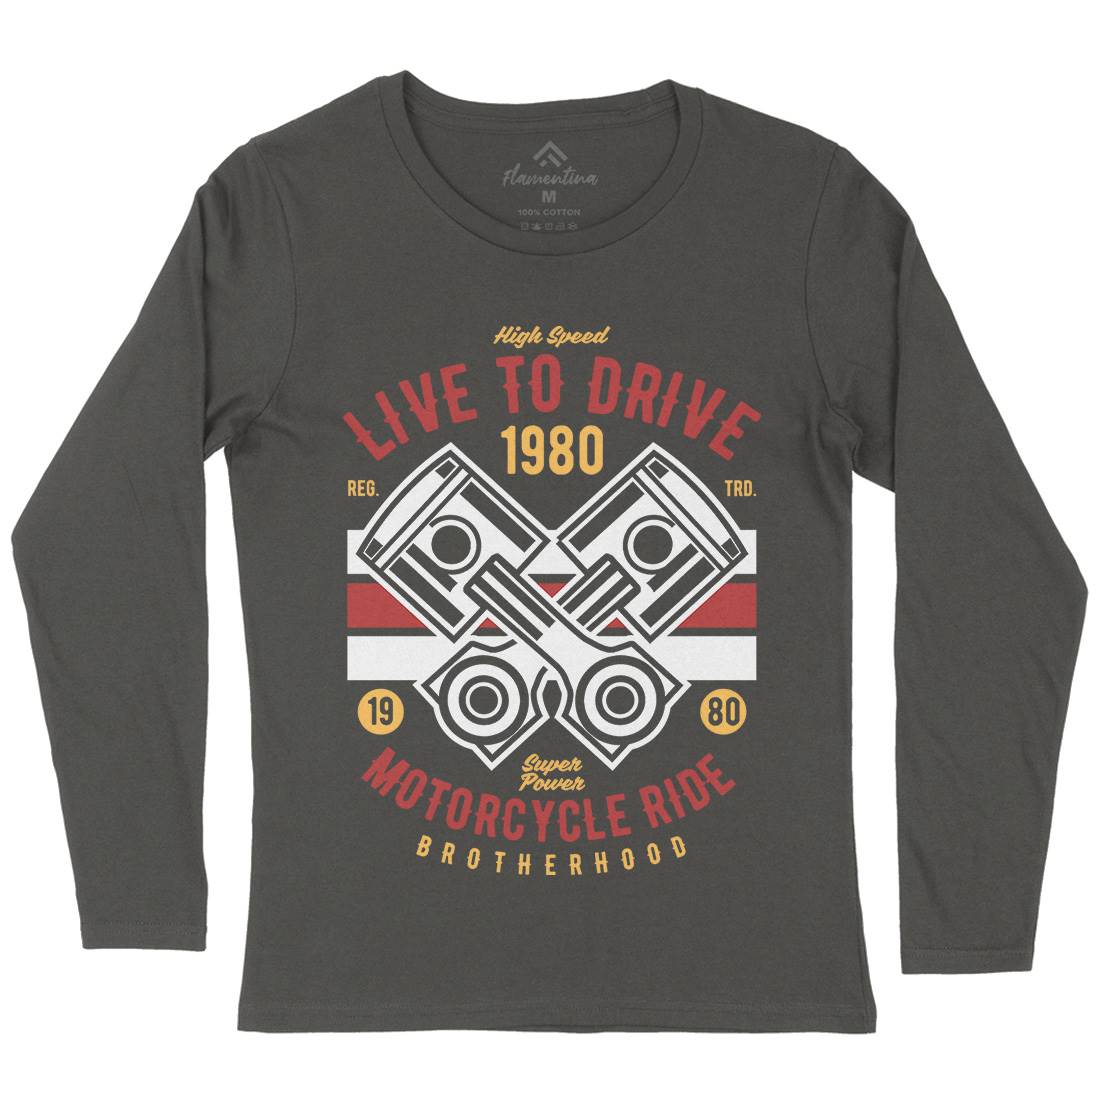 Live To Ride Womens Long Sleeve T-Shirt Cars B419